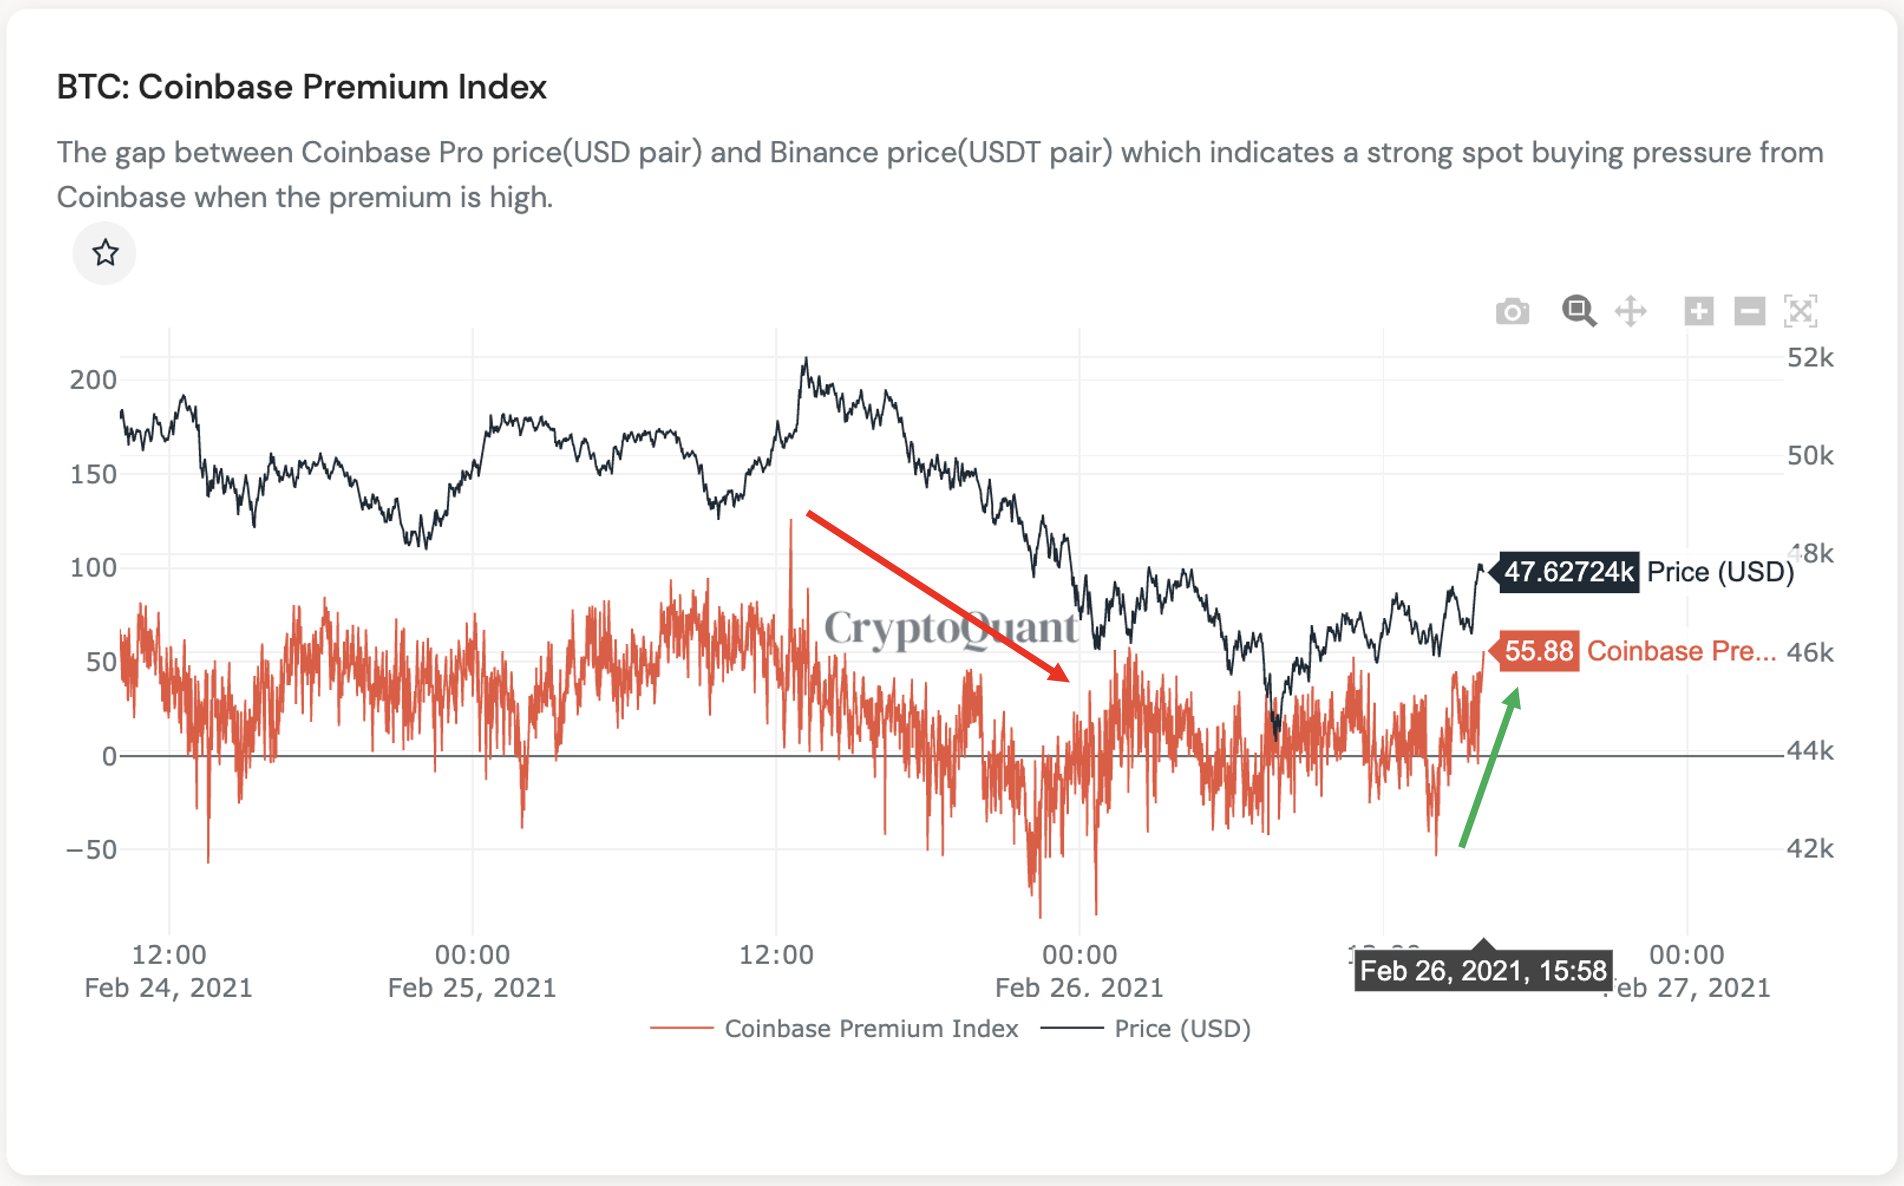 Coinbase premium turned positive, Bitcoin bull run is on?